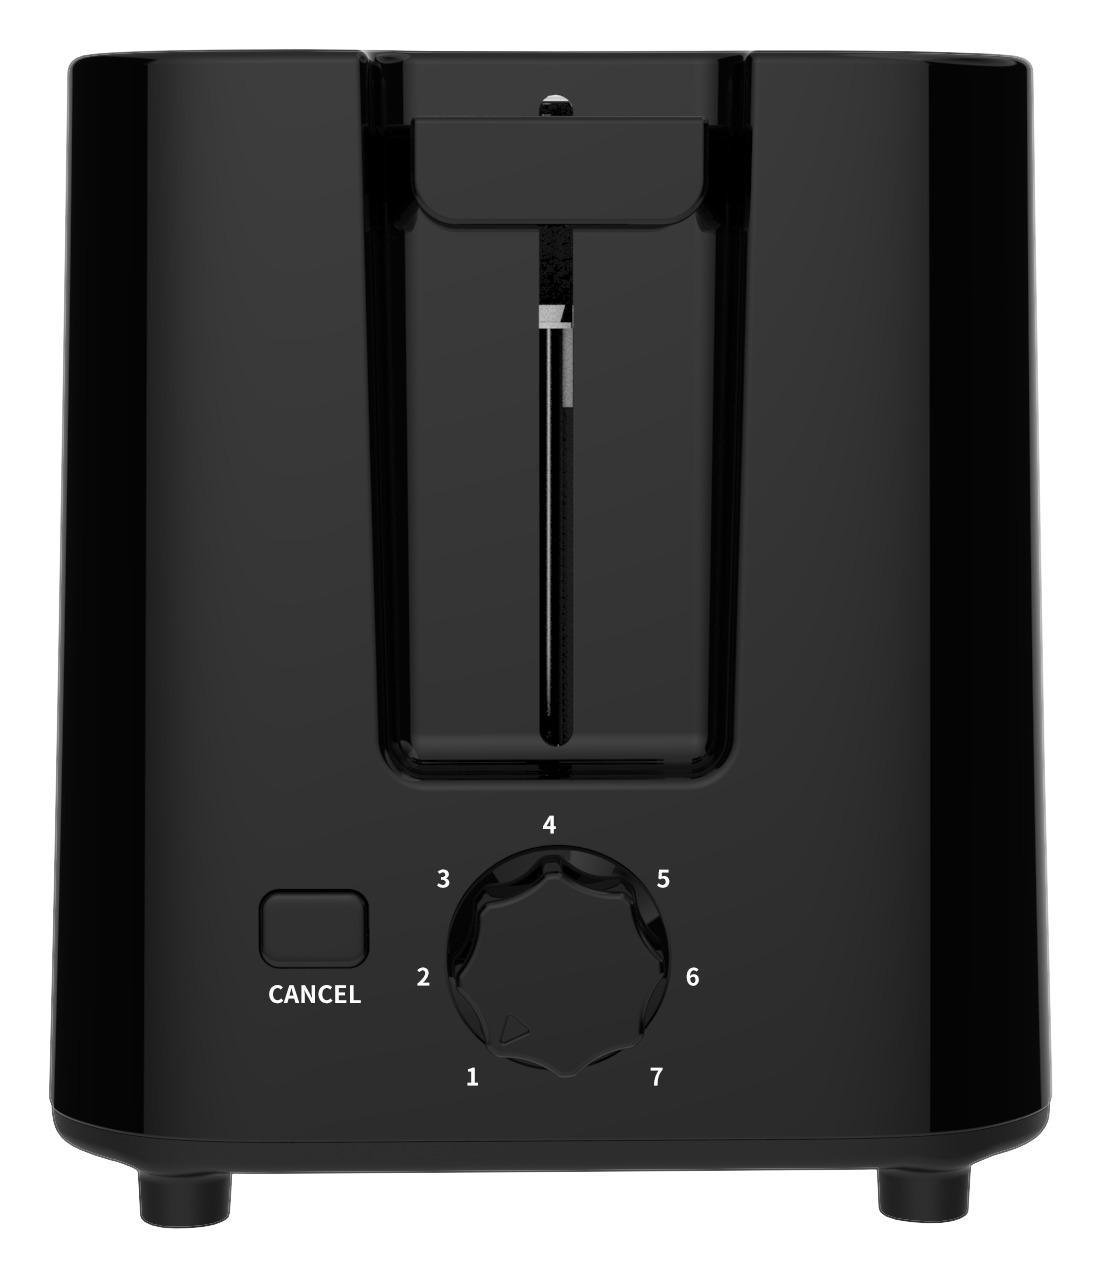 Toaster Role max. 700 Watt - Edelstahlfarben/Schwarz, MODERN, Kunststoff/Metall (23,2/14,2/15,8cm) - Insido